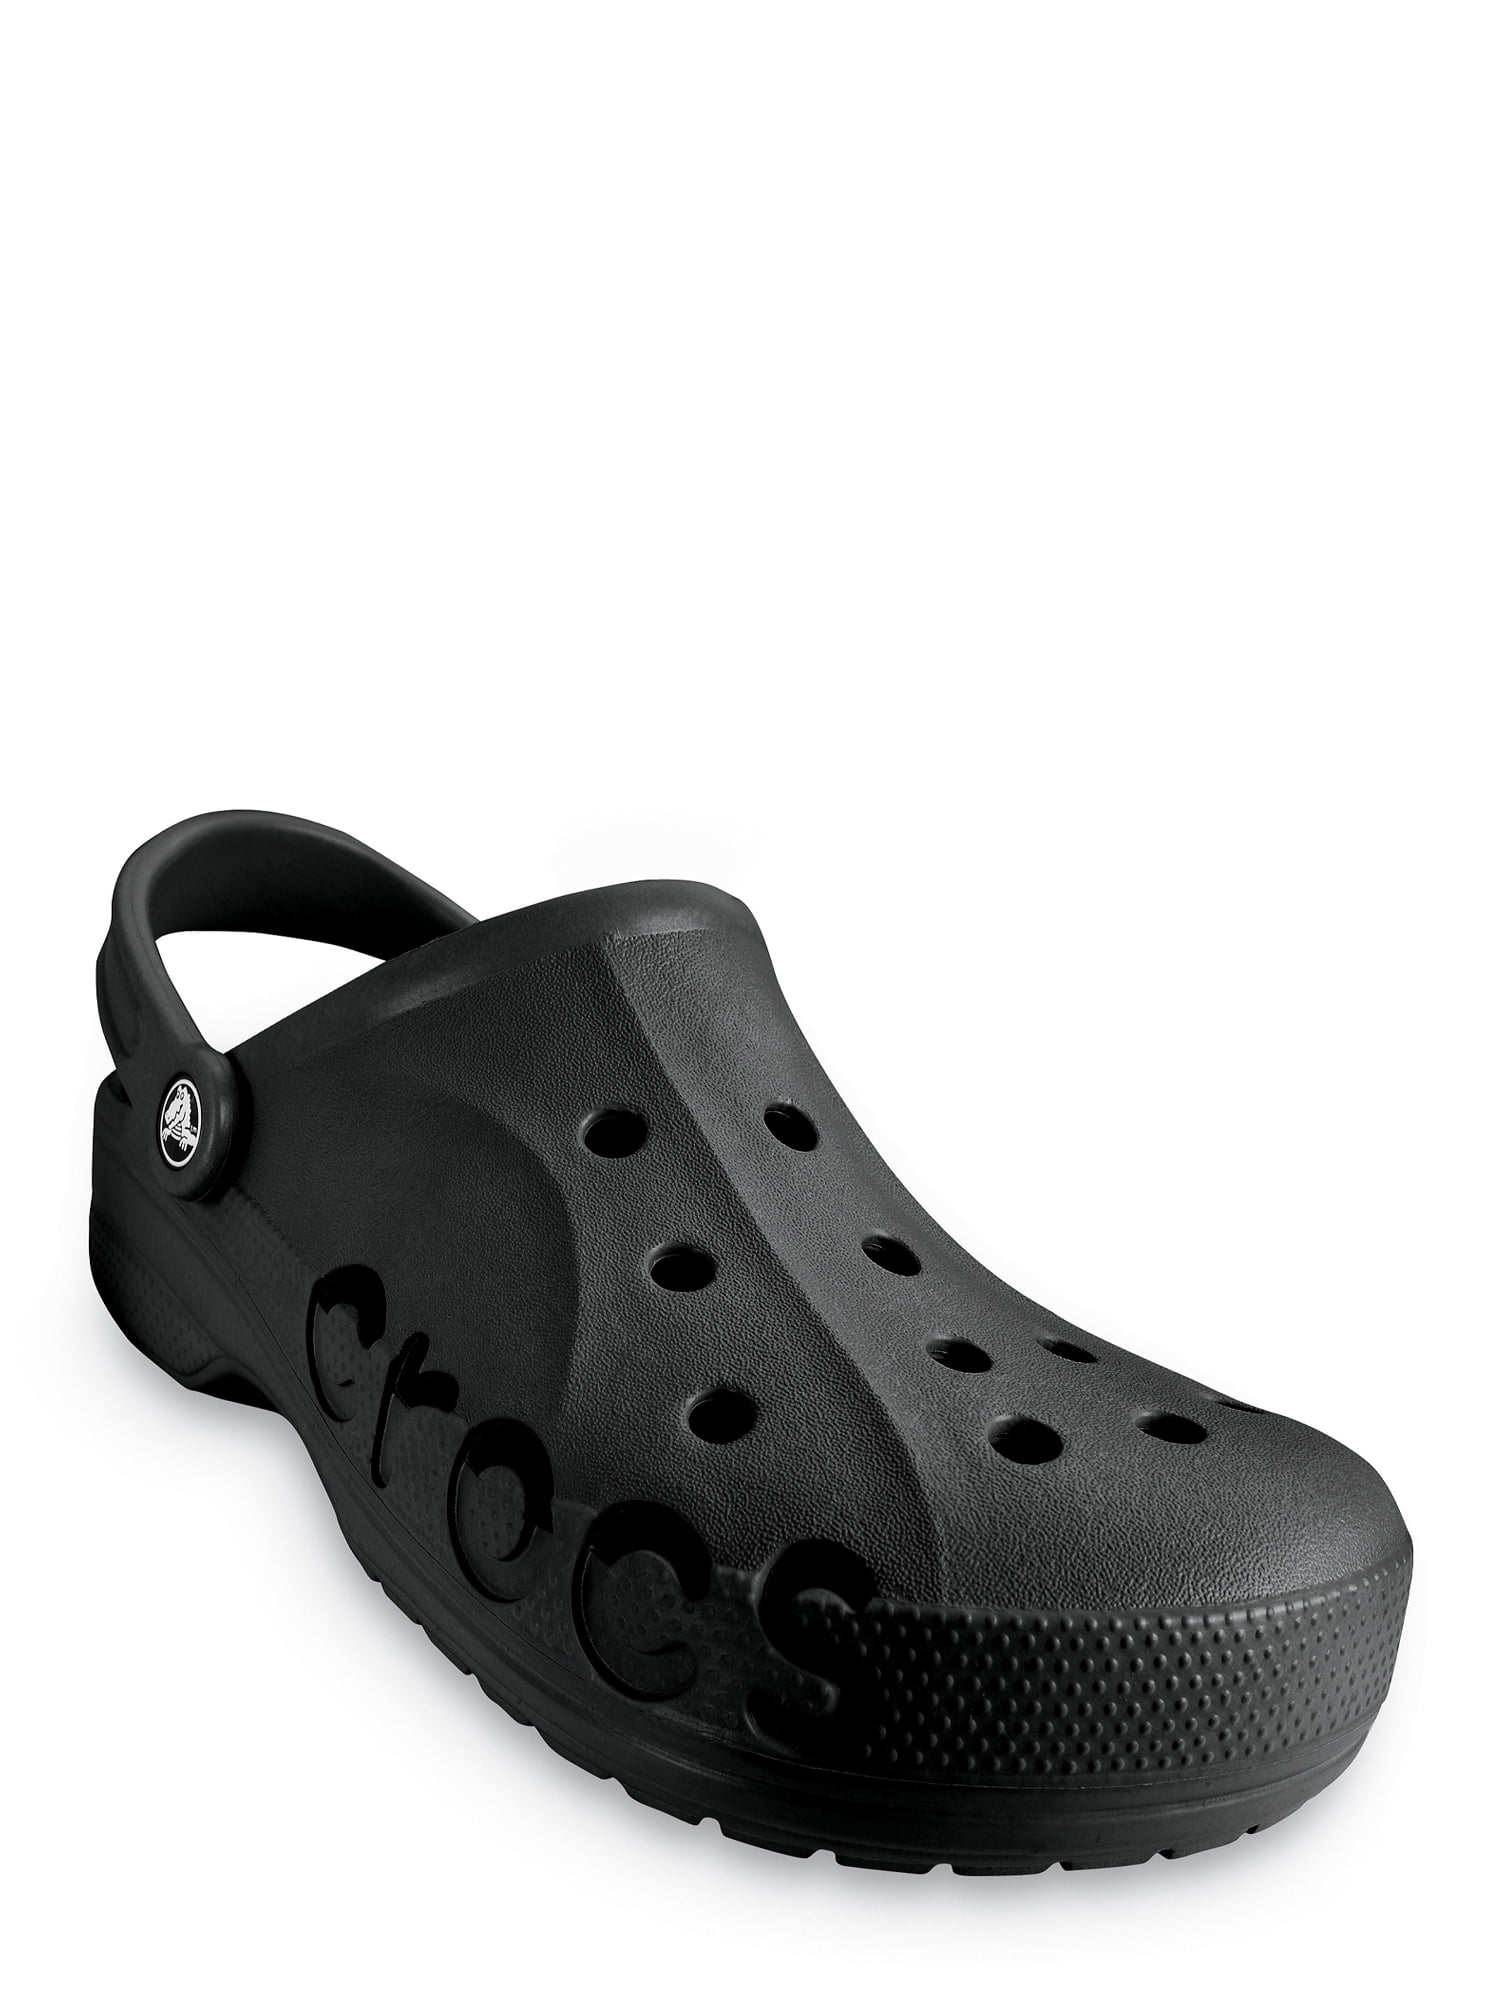 does walmart sell crocs shoes